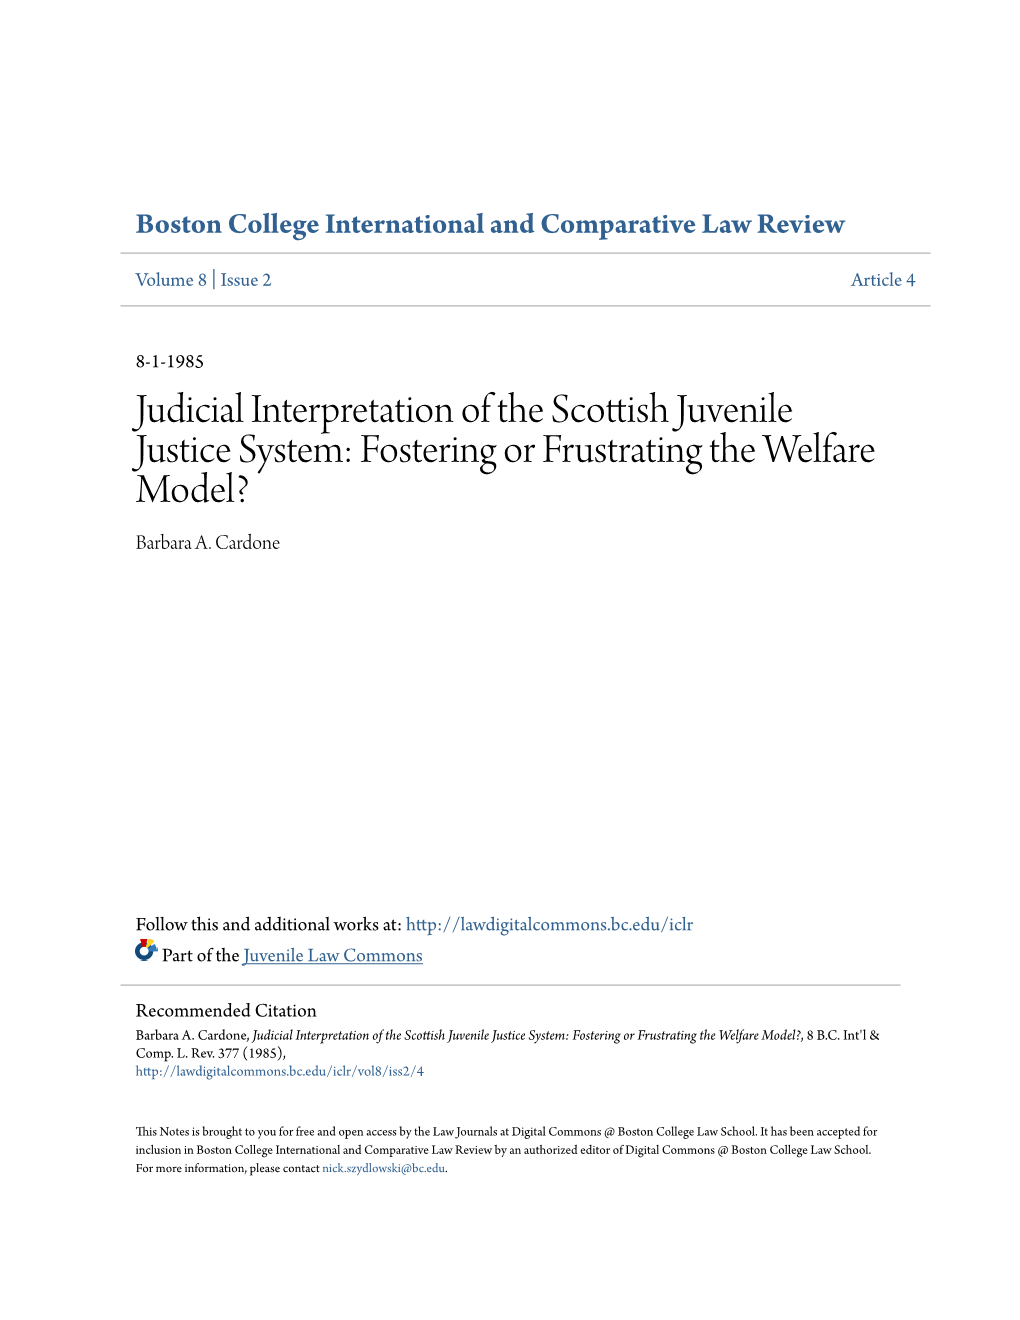 Judicial Interpretation of the Scottish Juvenile Justice System: Fostering Or Frustrating the Welfare Model? Barbara A